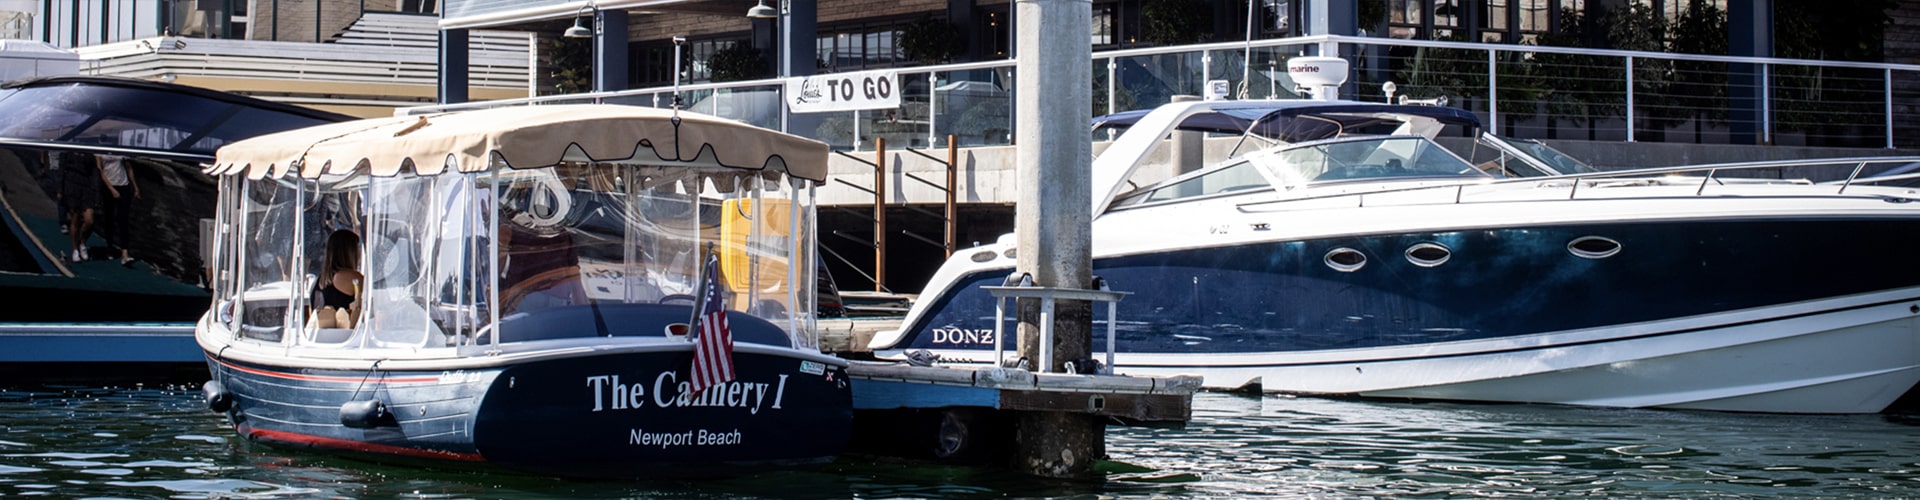 Boat rental